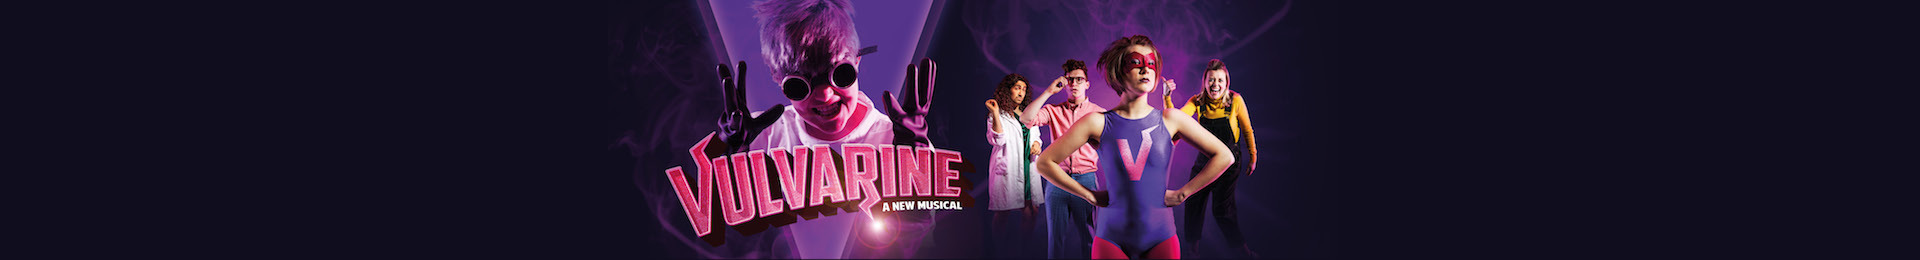 Vulvarine: A New Musical banner image